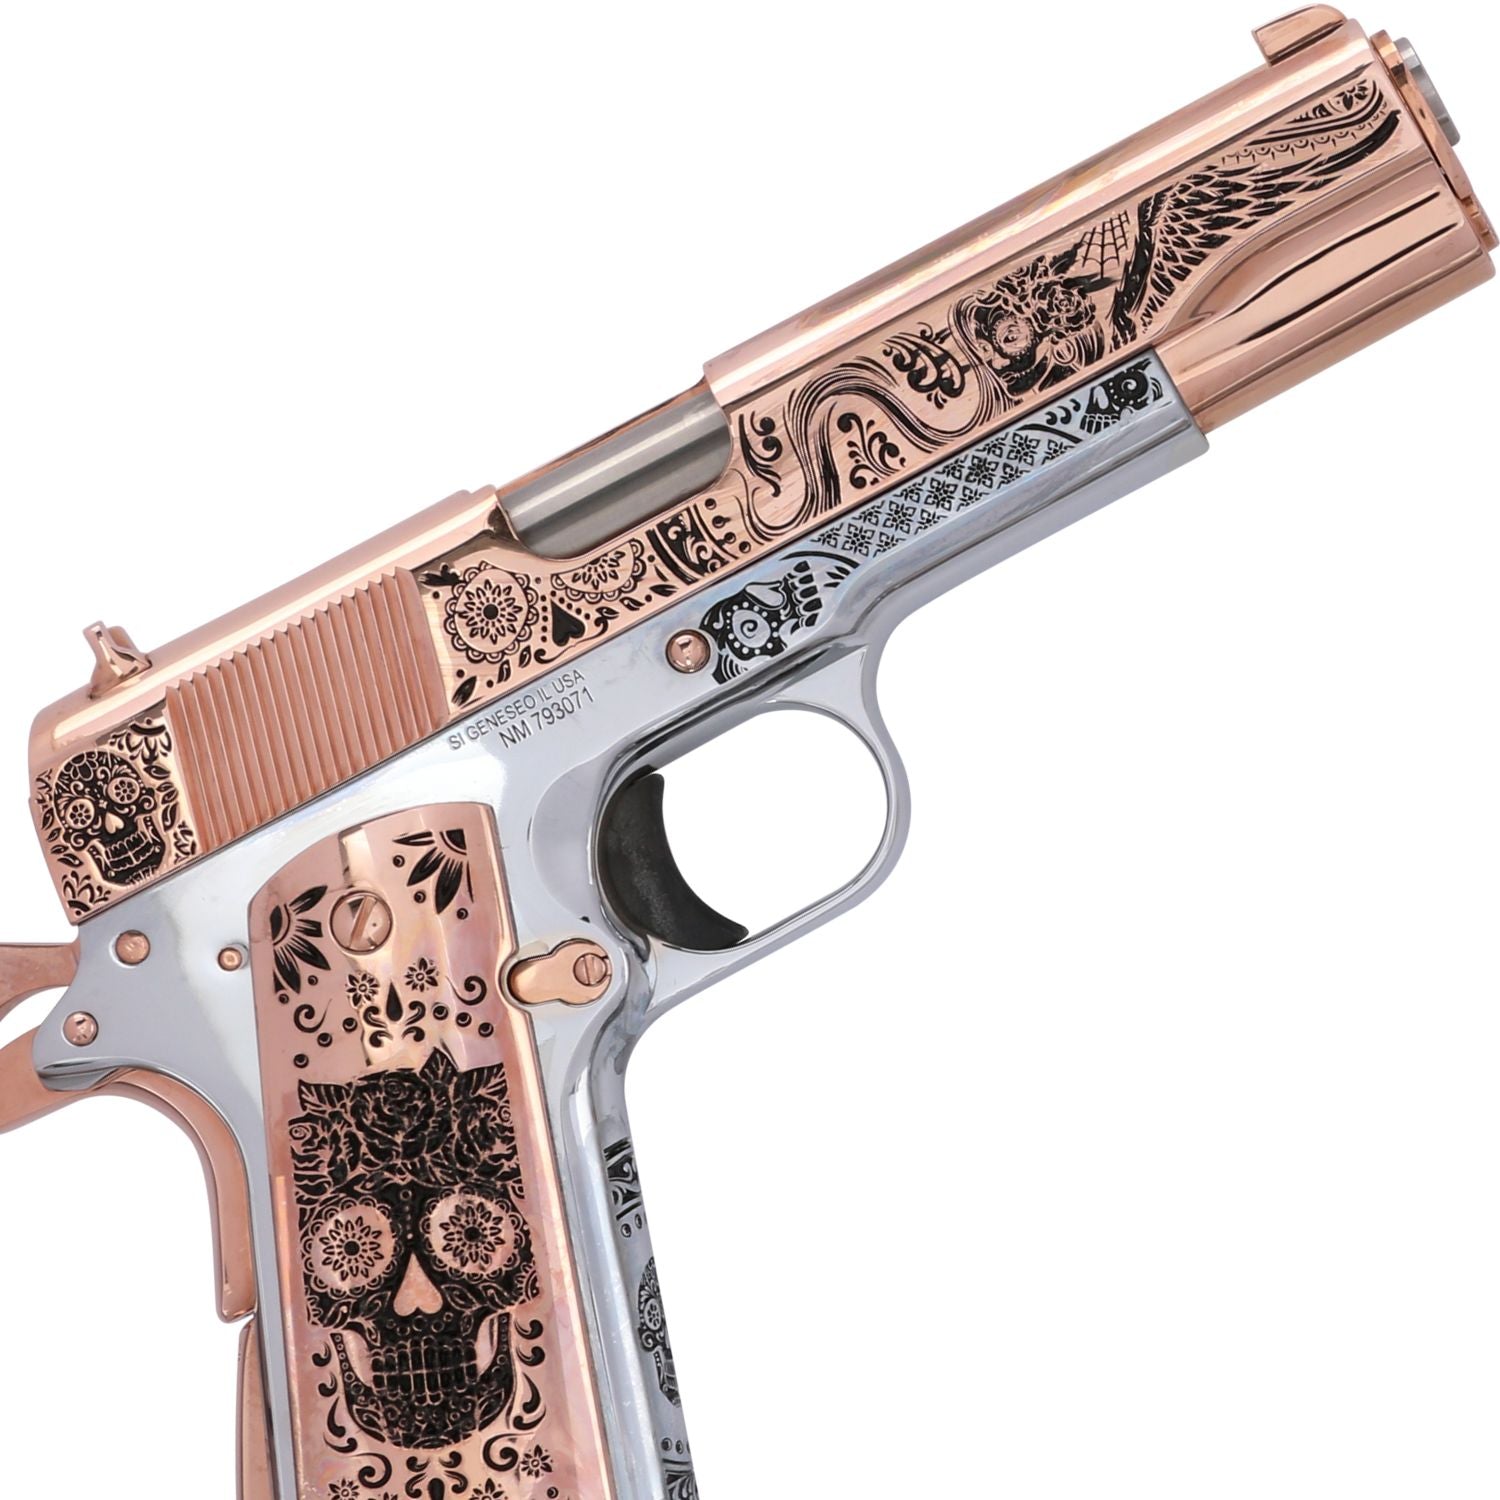 Springfield 1911 Mil-Spec .45 ACP Catrina 18 karat Rose Gold Pistol, SKU: 6966549938278, 18 karat  Rose gold gun, 18 Karat Gold Firearm, California compliant handguns